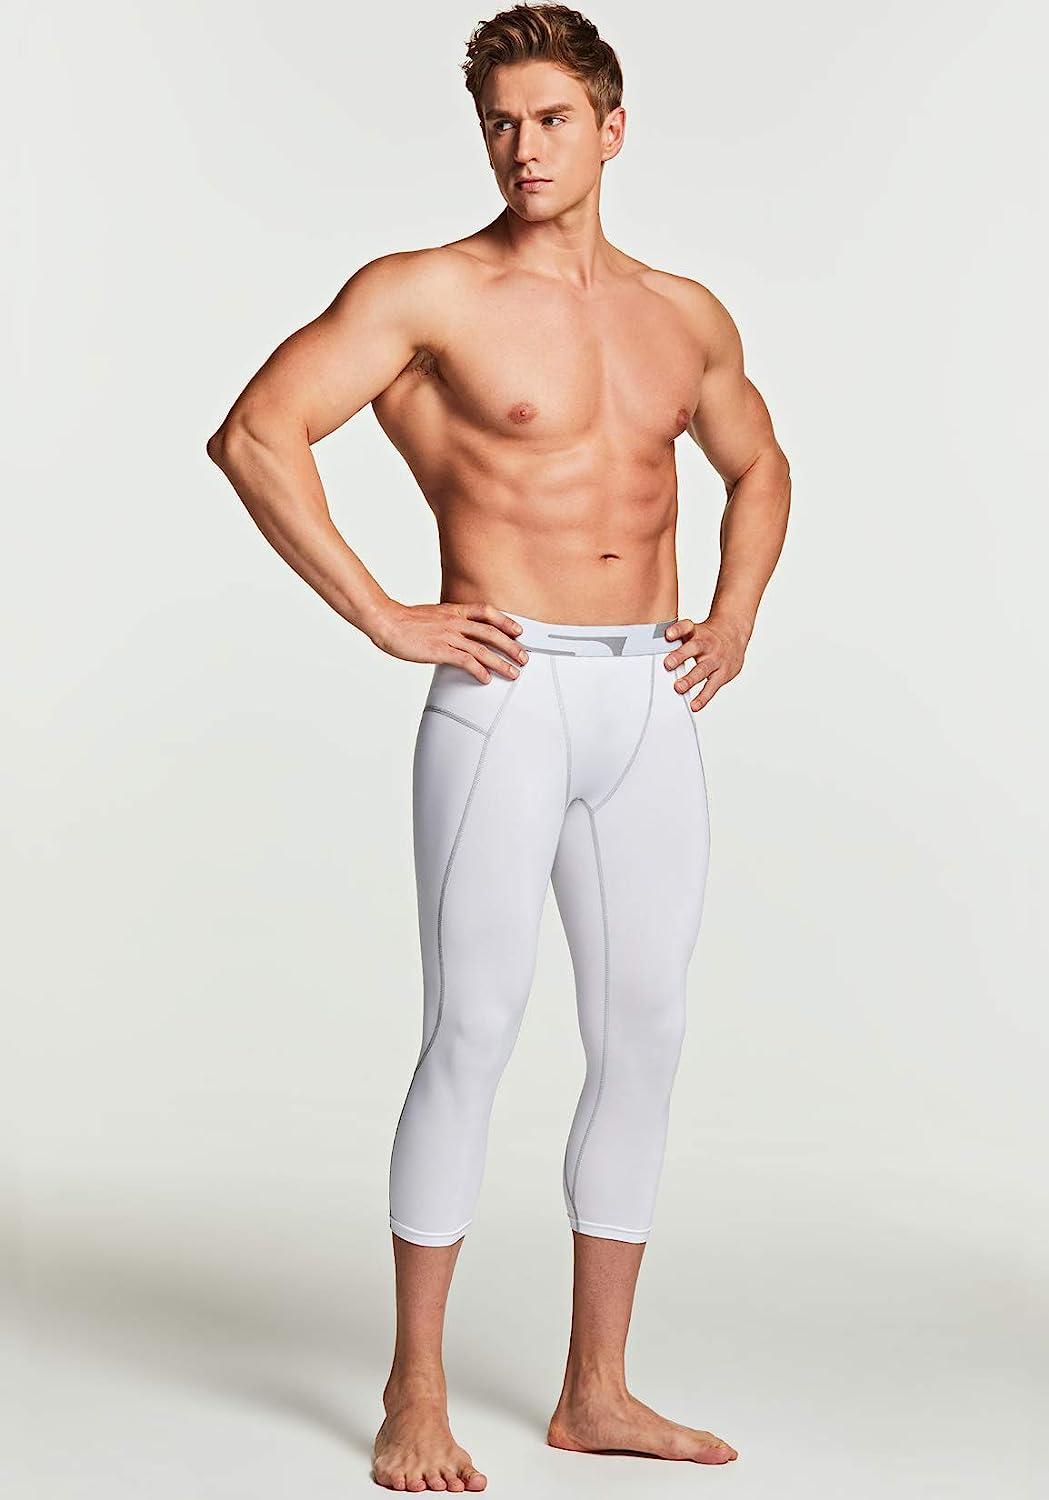 Differio Printed Gym Leggings in Two Tone | Mens workout clothes, Mens  leggings fashion, Printed gym leggings